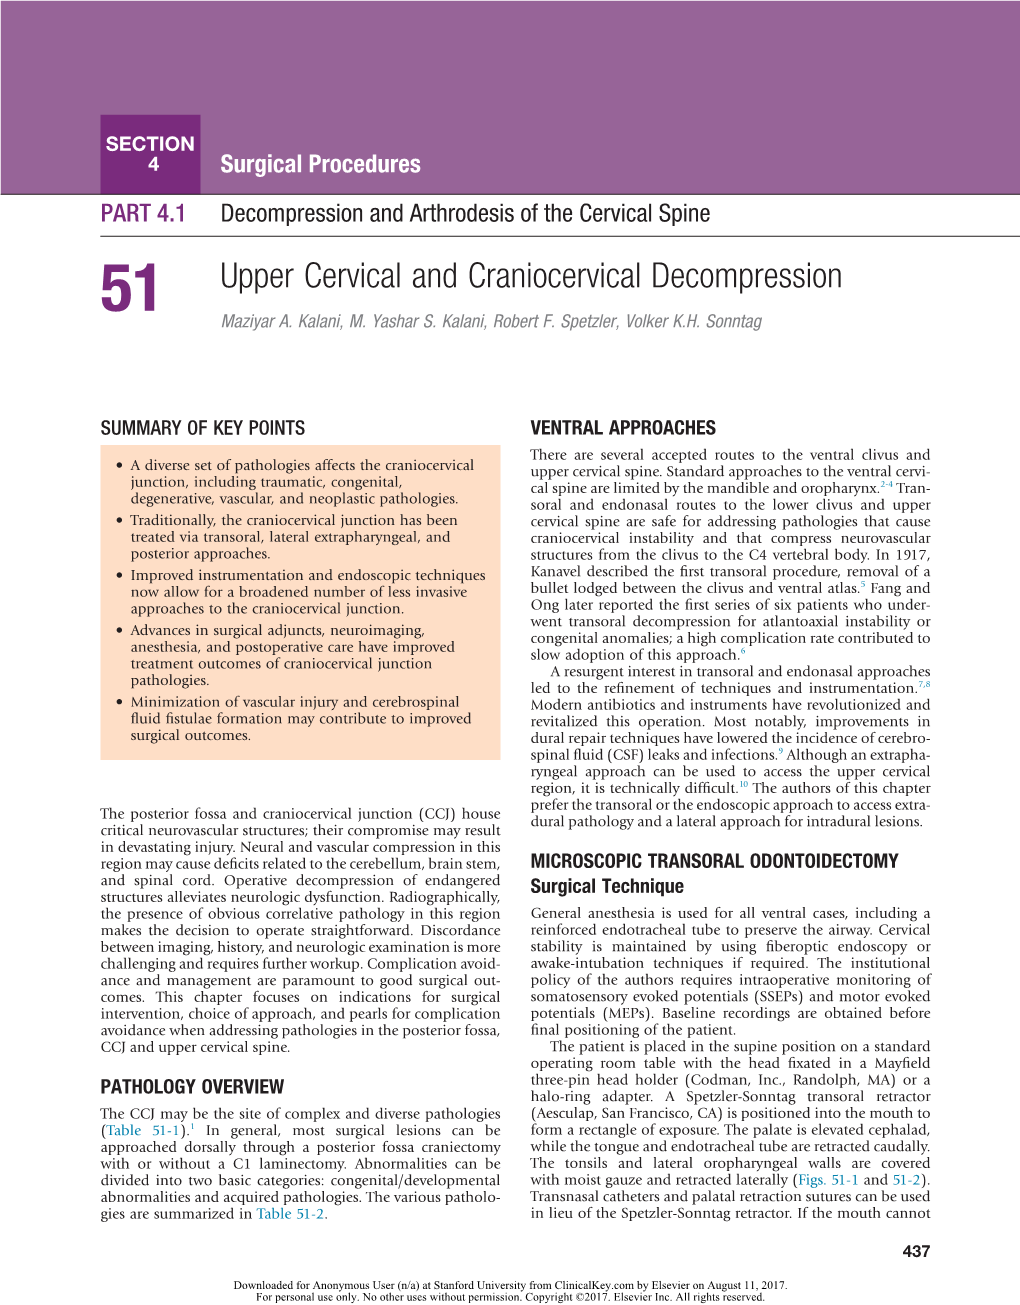 Upper Cervical and Craniocervical Decompression Maziyar A